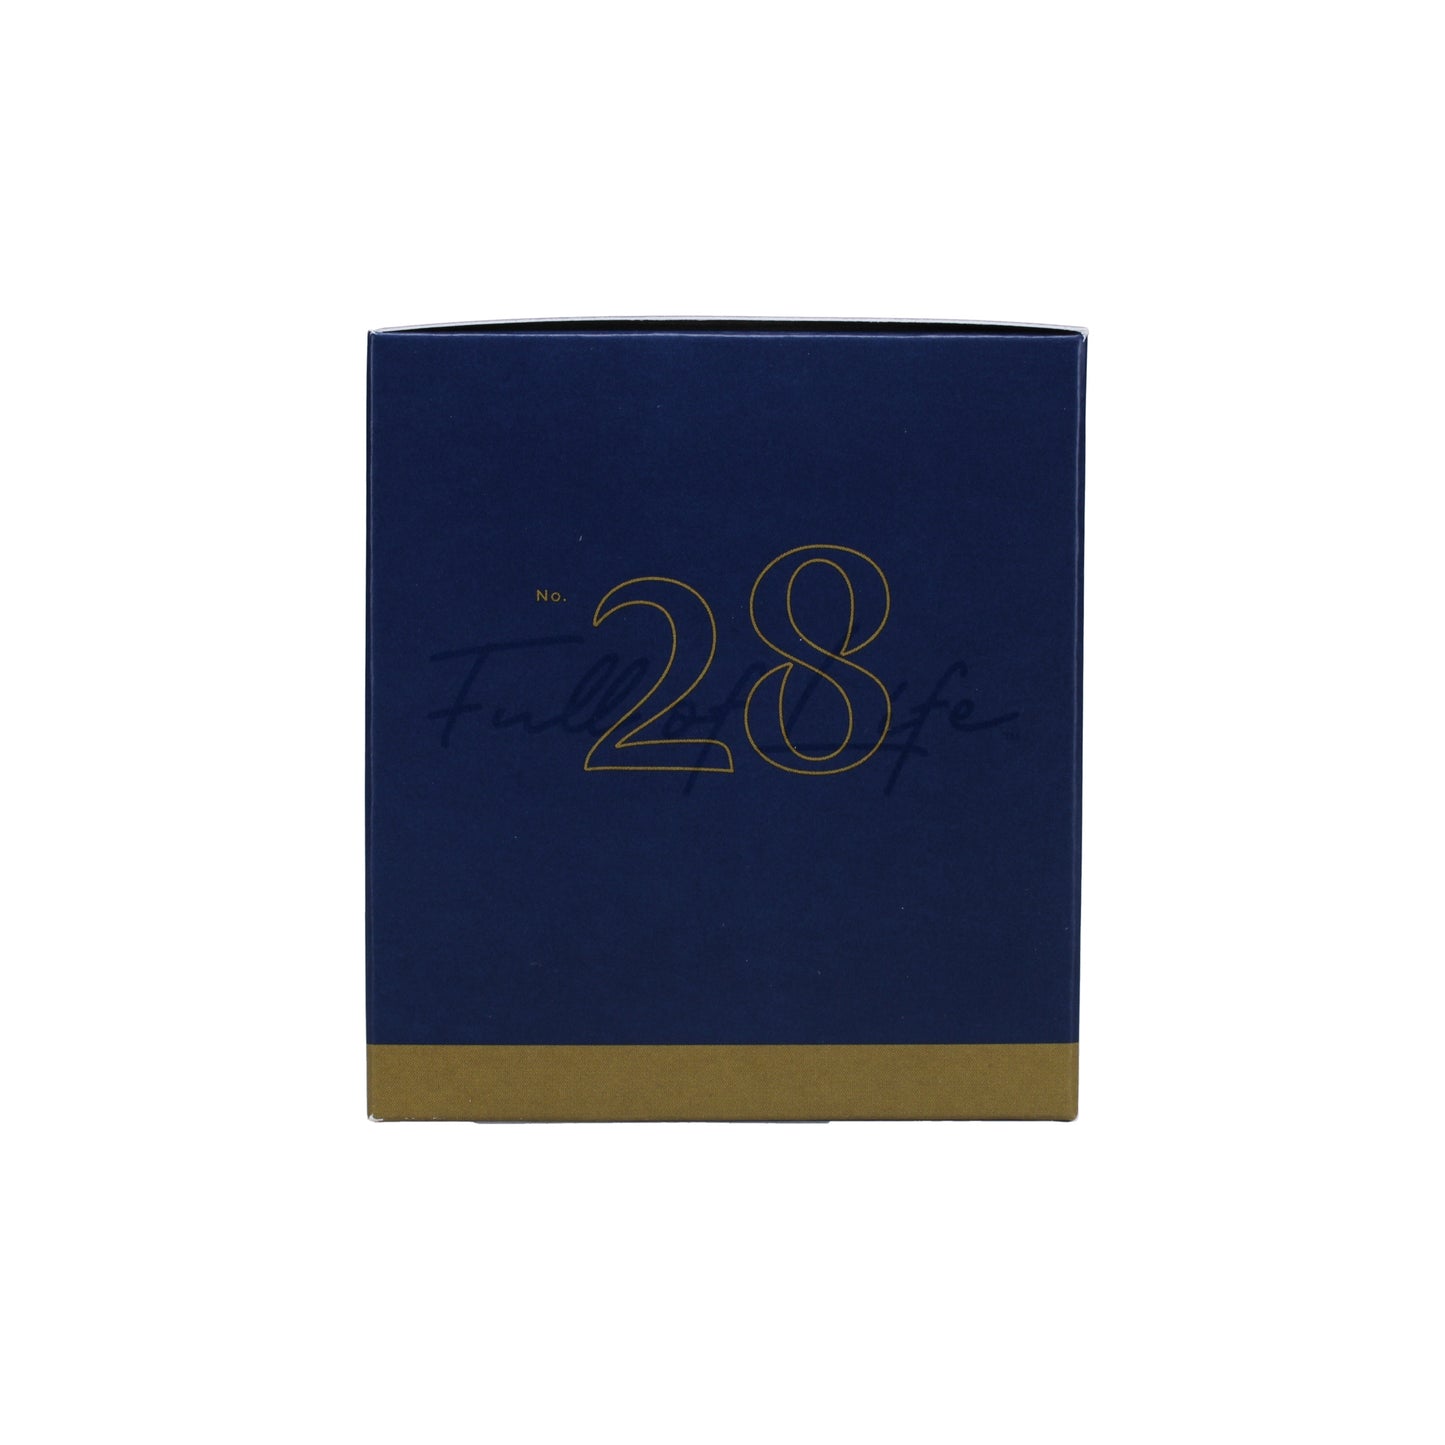 No. 28 Bamboo Citrus 7 oz. Candle in Signature Box Image 6